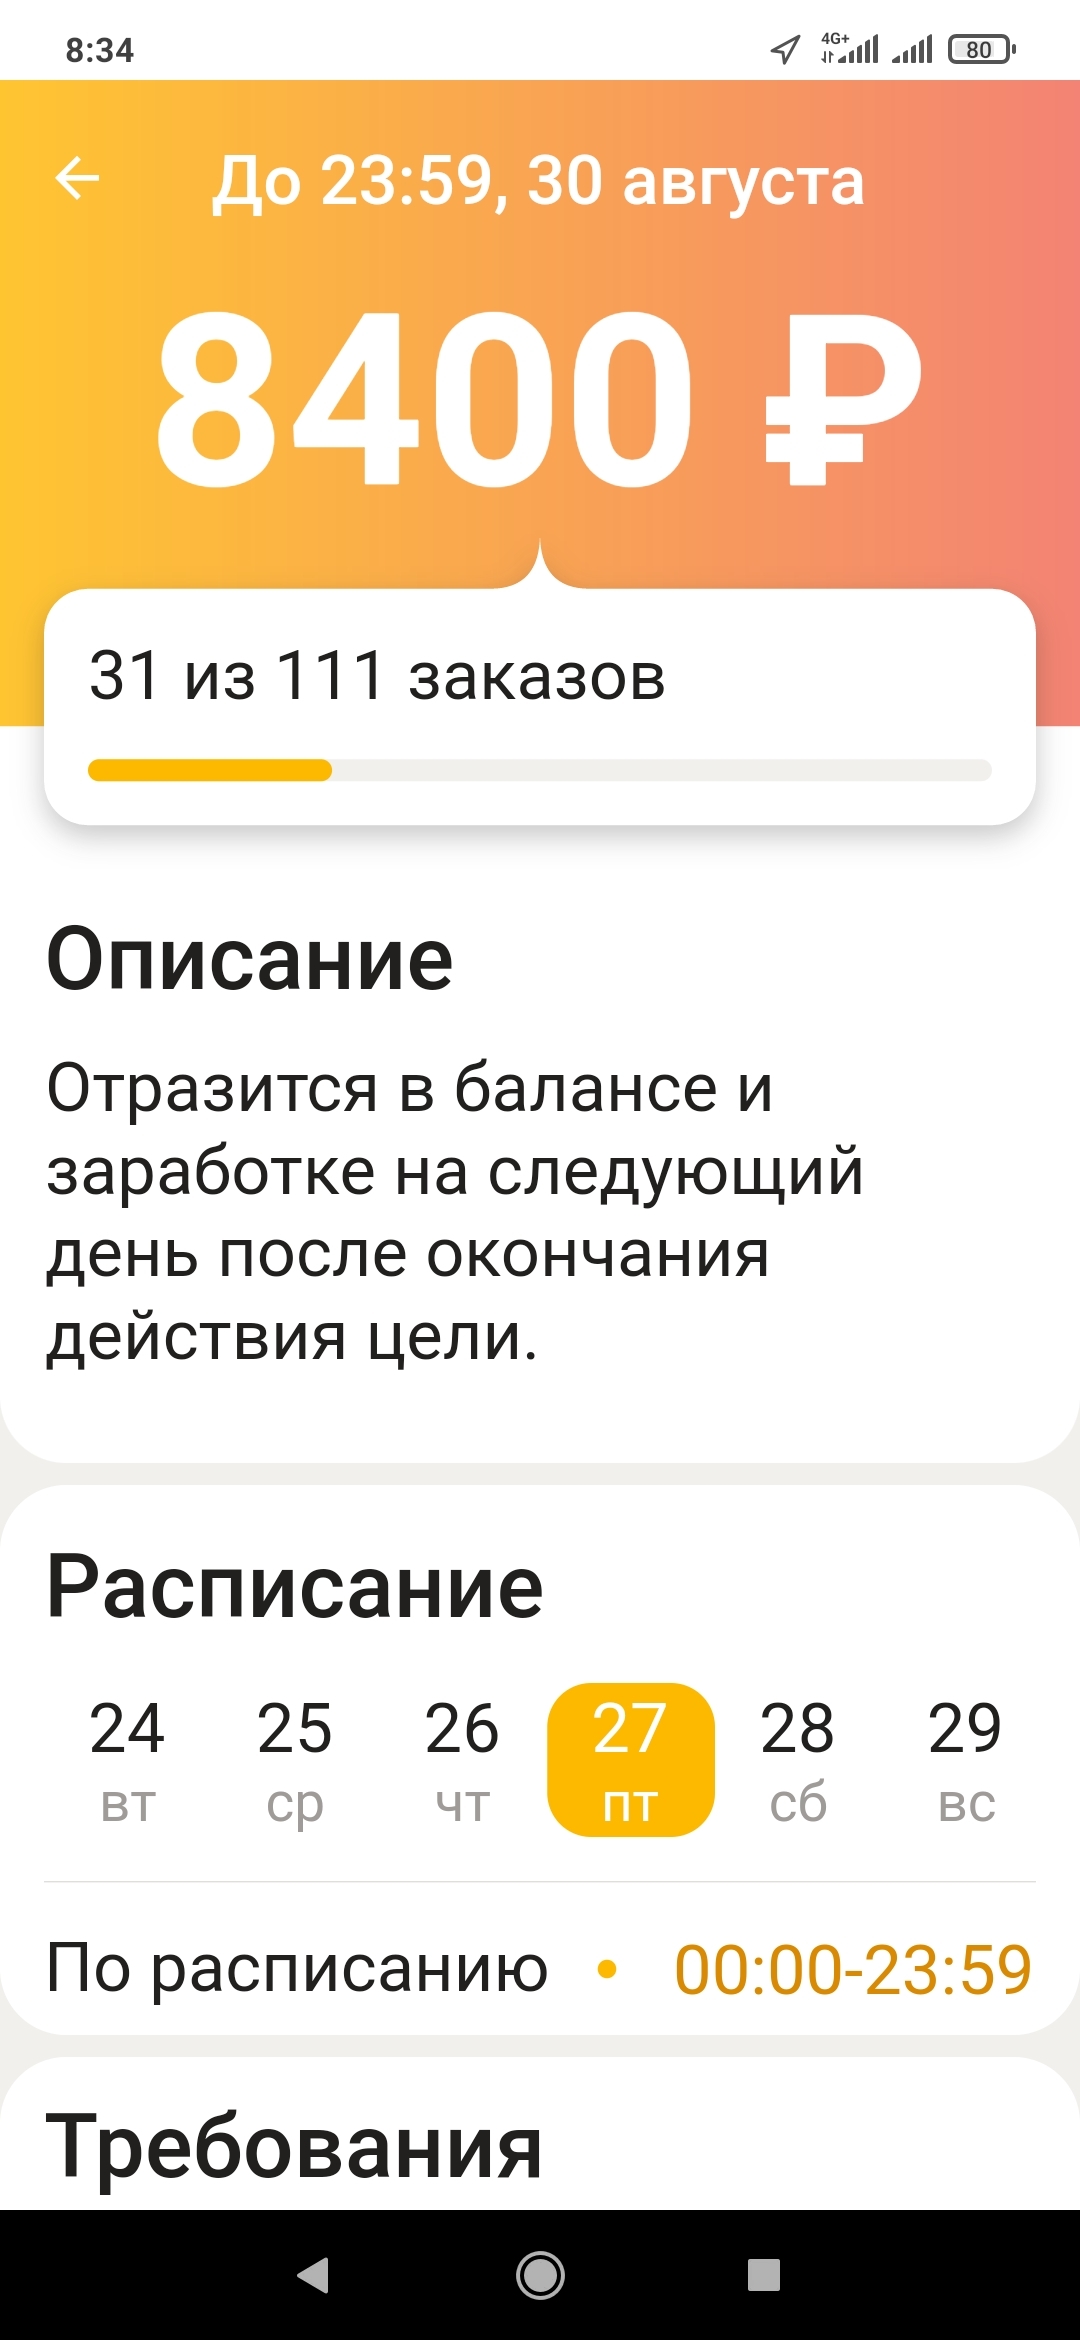 Яндекс про. Алгоритм работы блокировки по времени - Страница 2 - Форум Такси